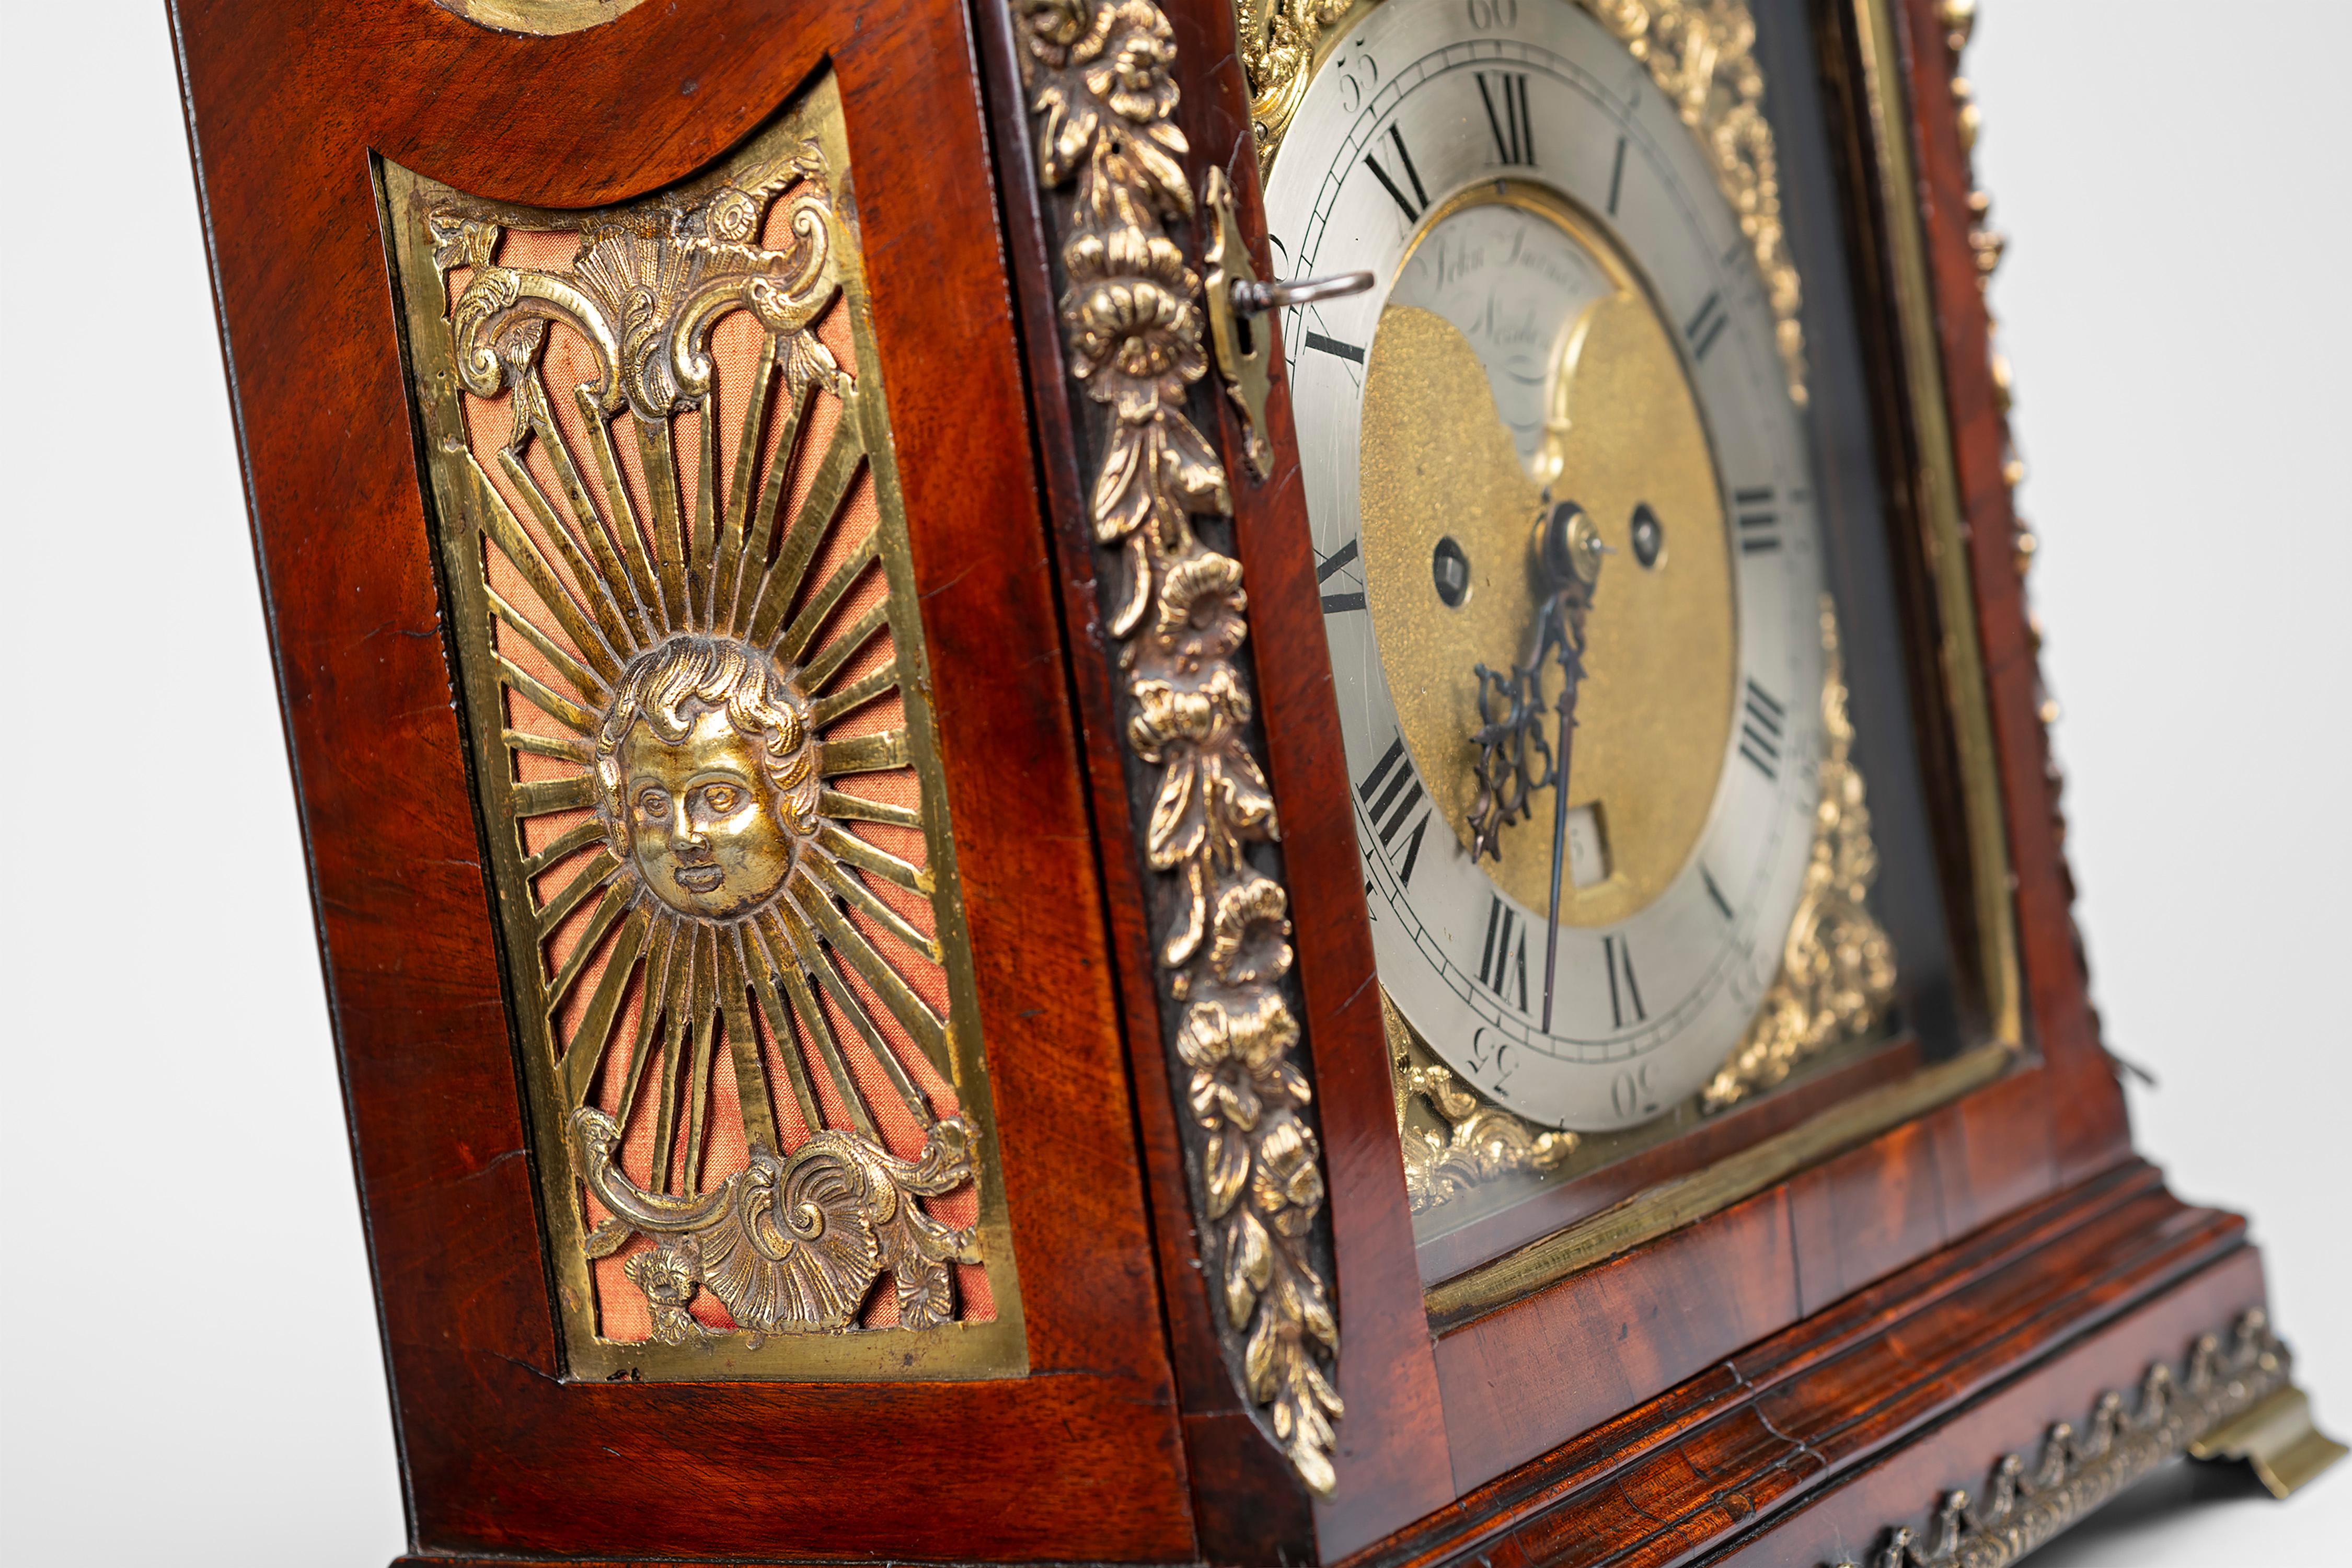 17th century bracket clock for sale